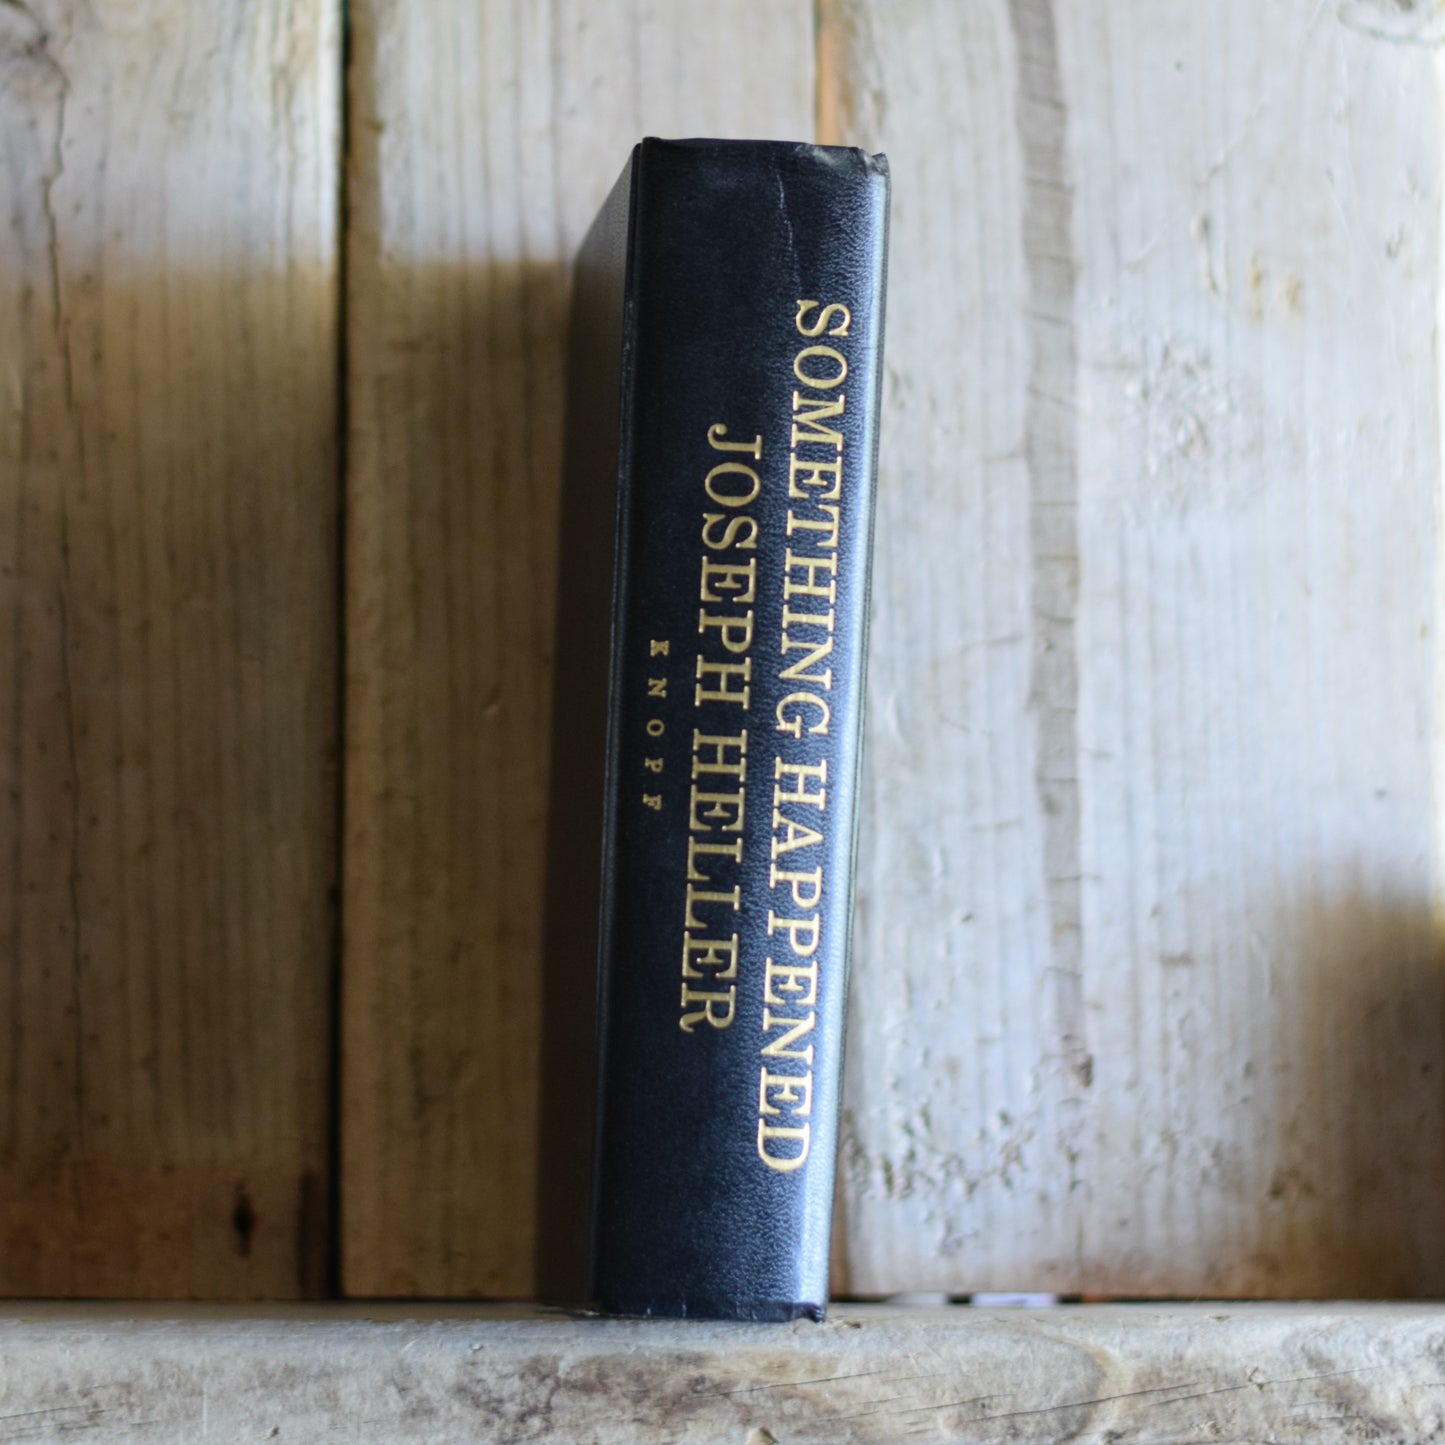 Vintage Fiction Hardback: Joseph Heller - Something Happened BCE